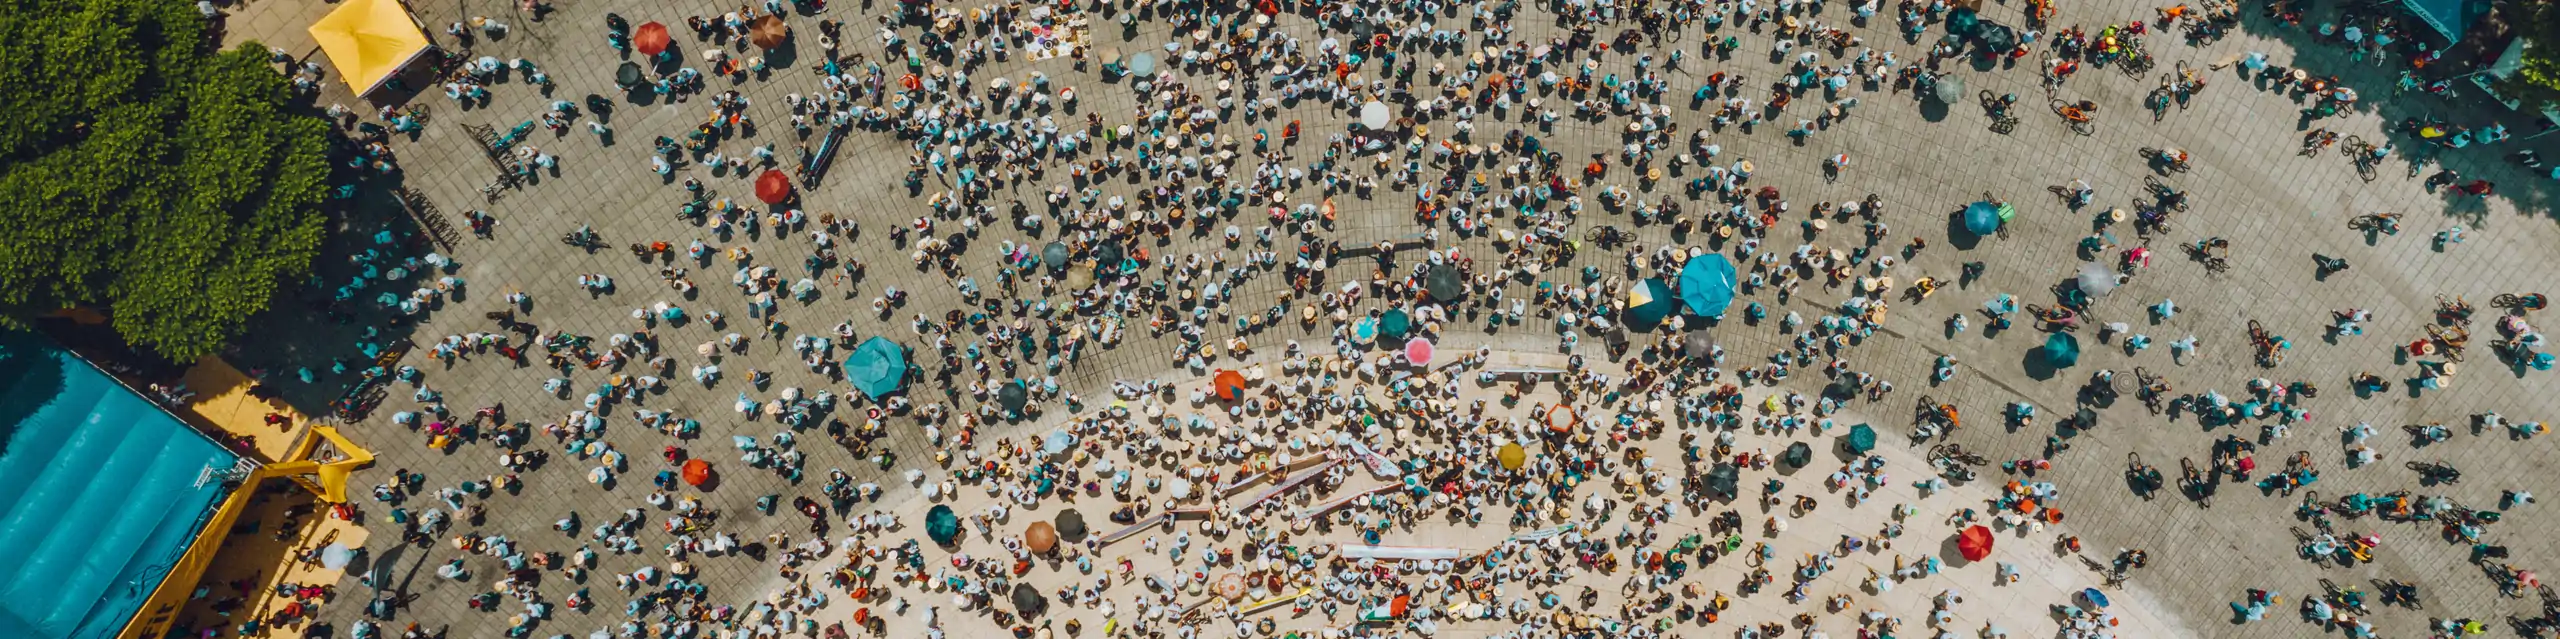 Urban crowd, Mexico